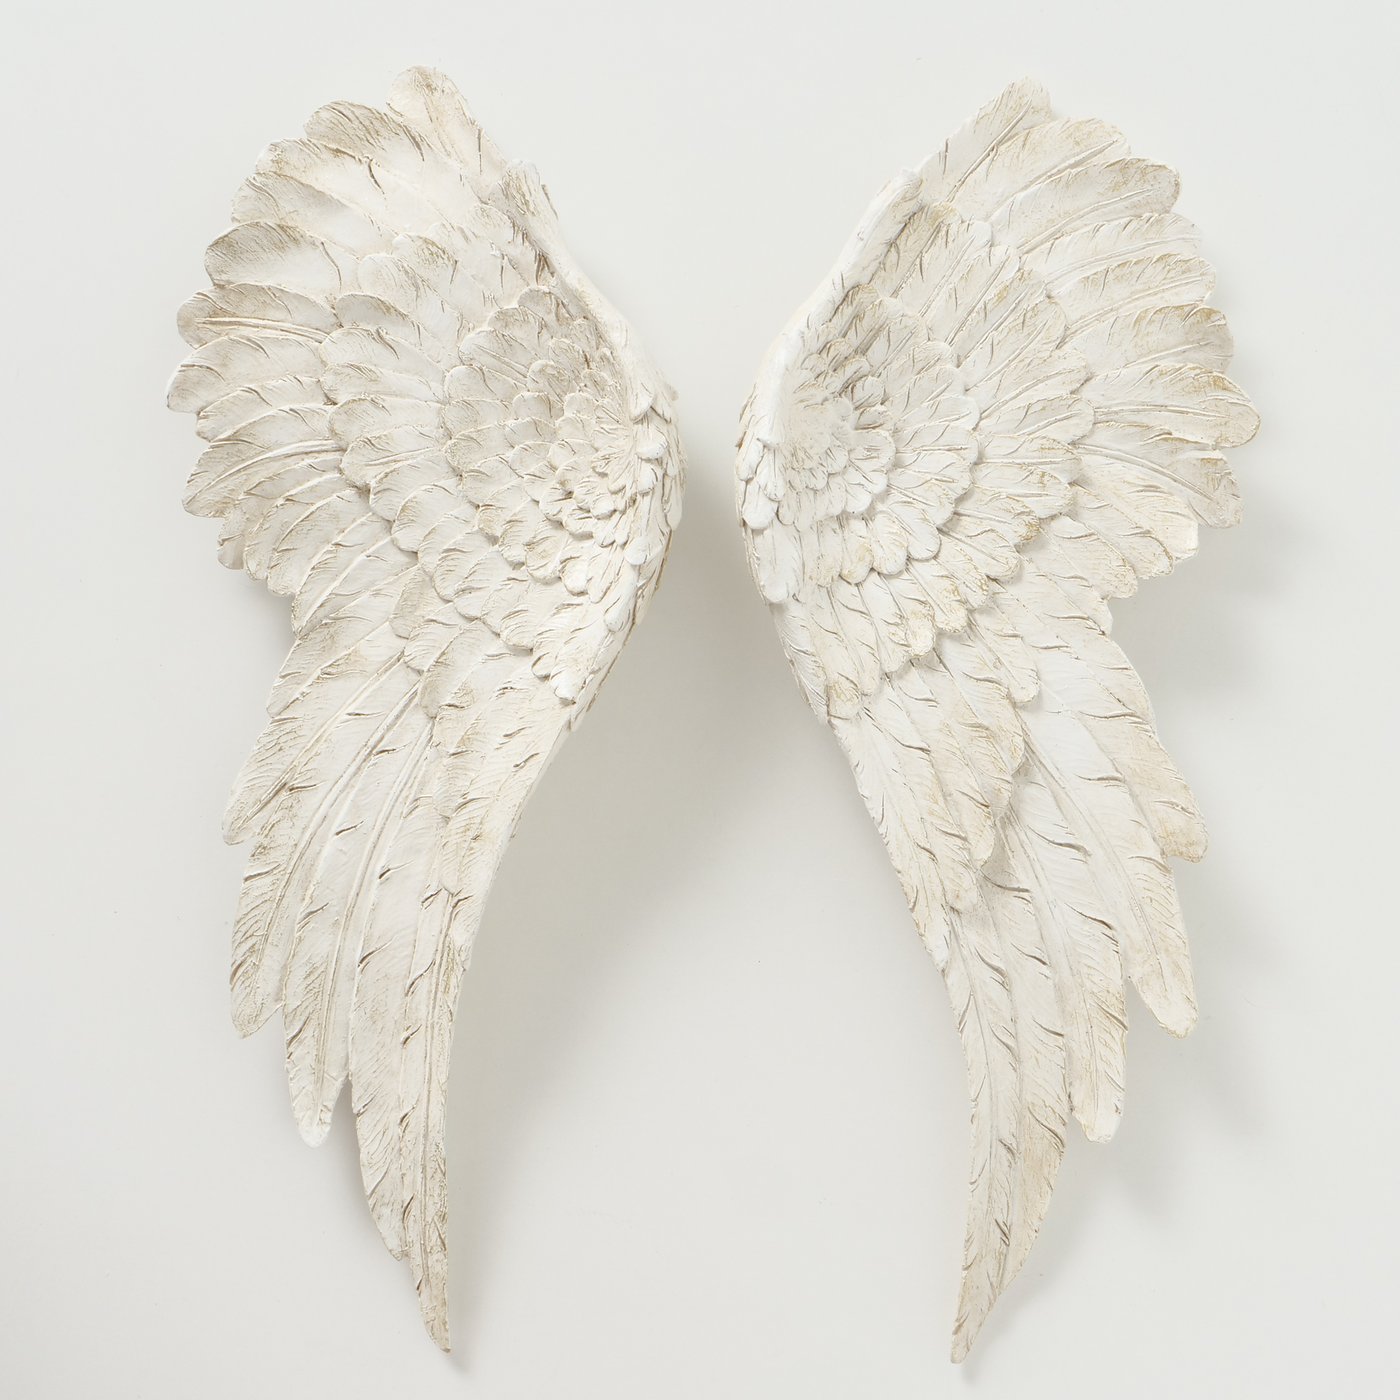 Wanddeko Engelsflügel 2 Stück Antik Weiß 55x22cm Flügel Engel Dekoration